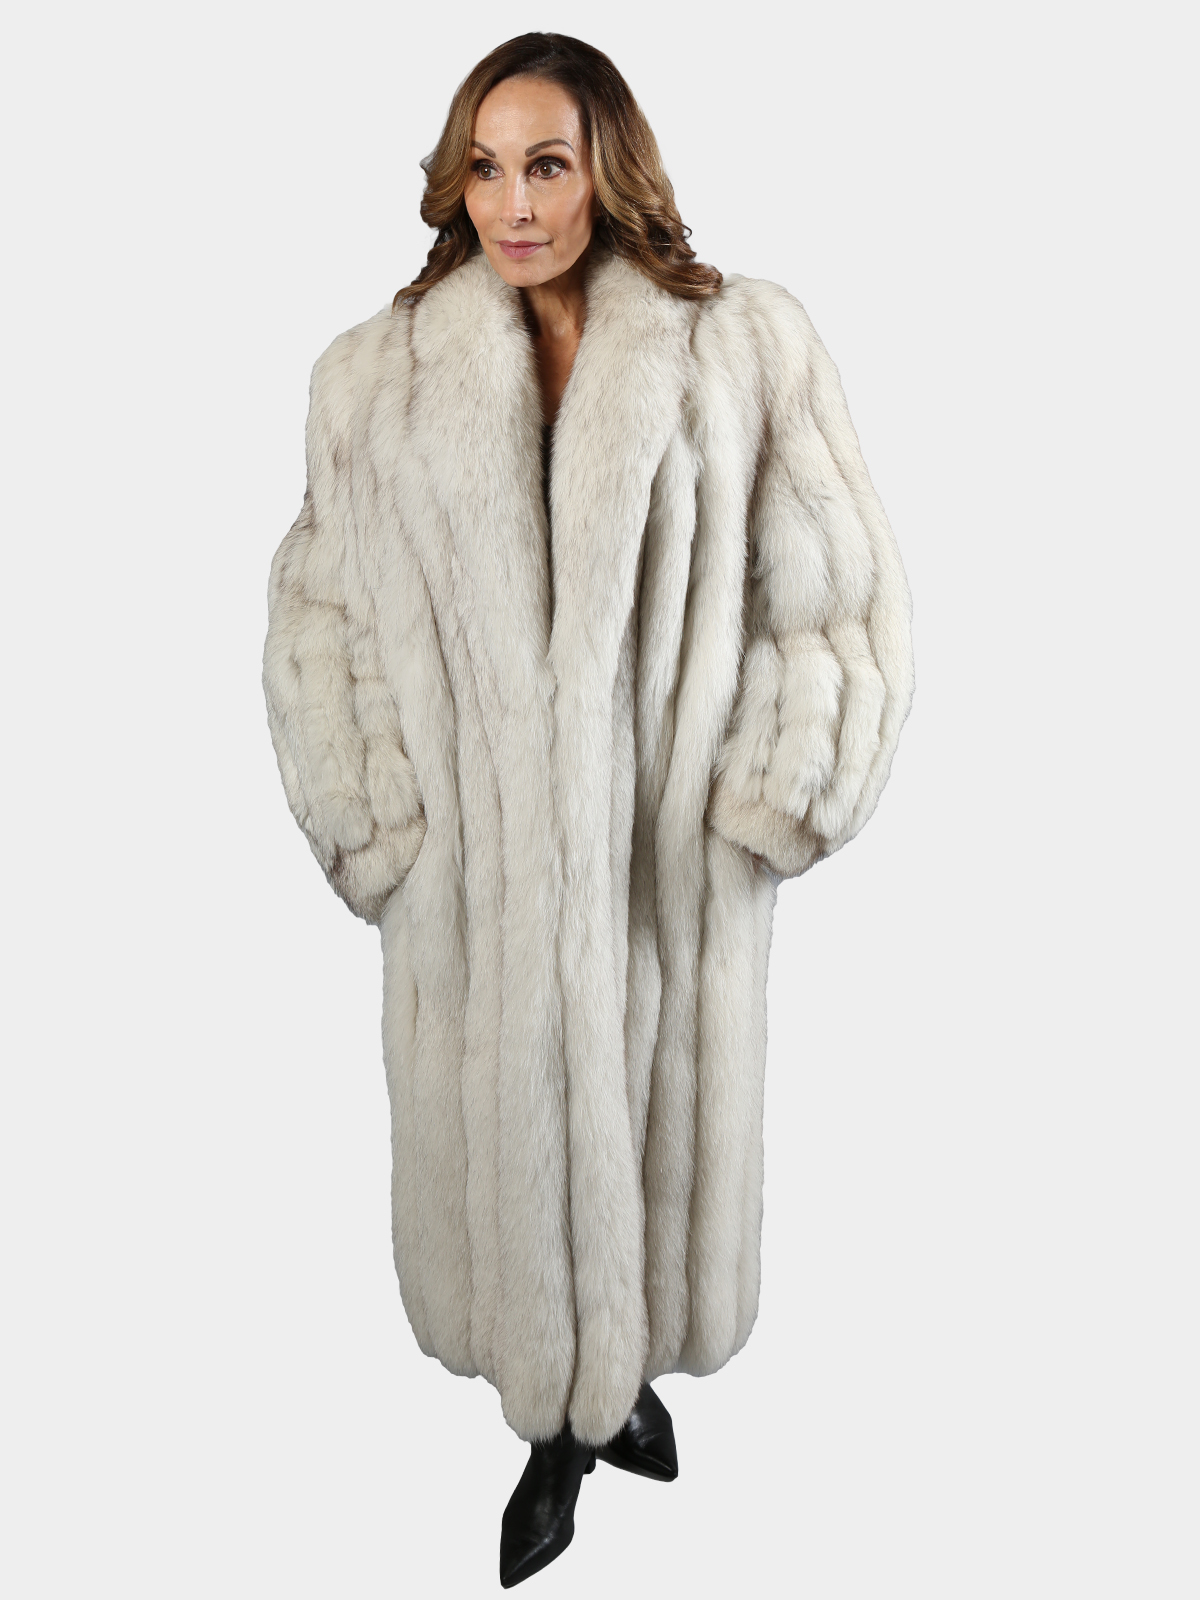 Blue Fox Fur Coat (Women's Small) - Estate Furs